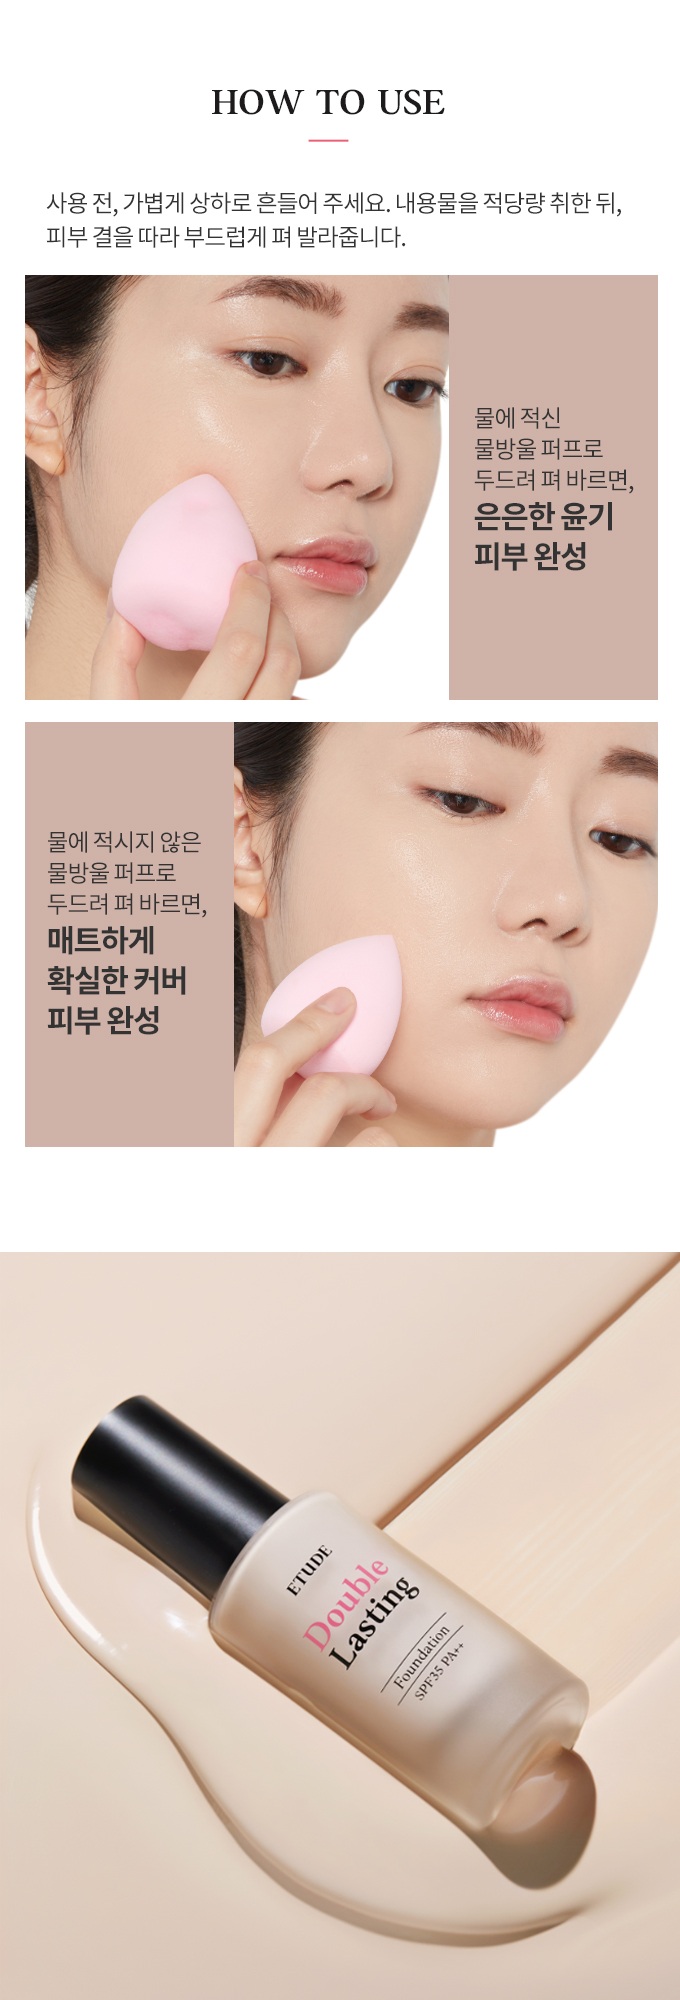 Etude House Double Lasting Foundation korean skincare product online shop malaysia China india6